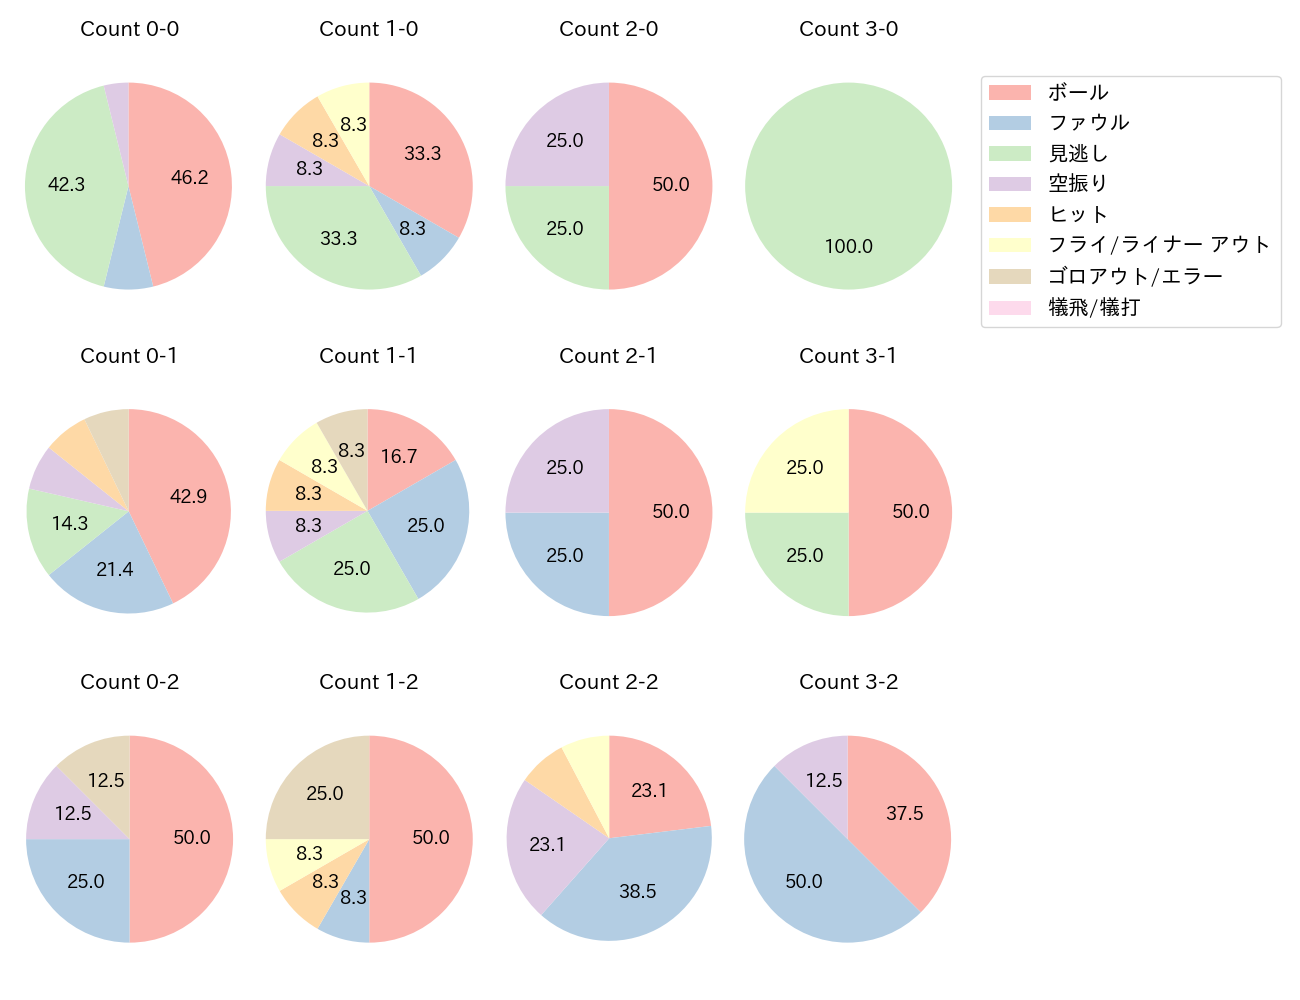 平沼 翔太の球数分布(2022年6月)